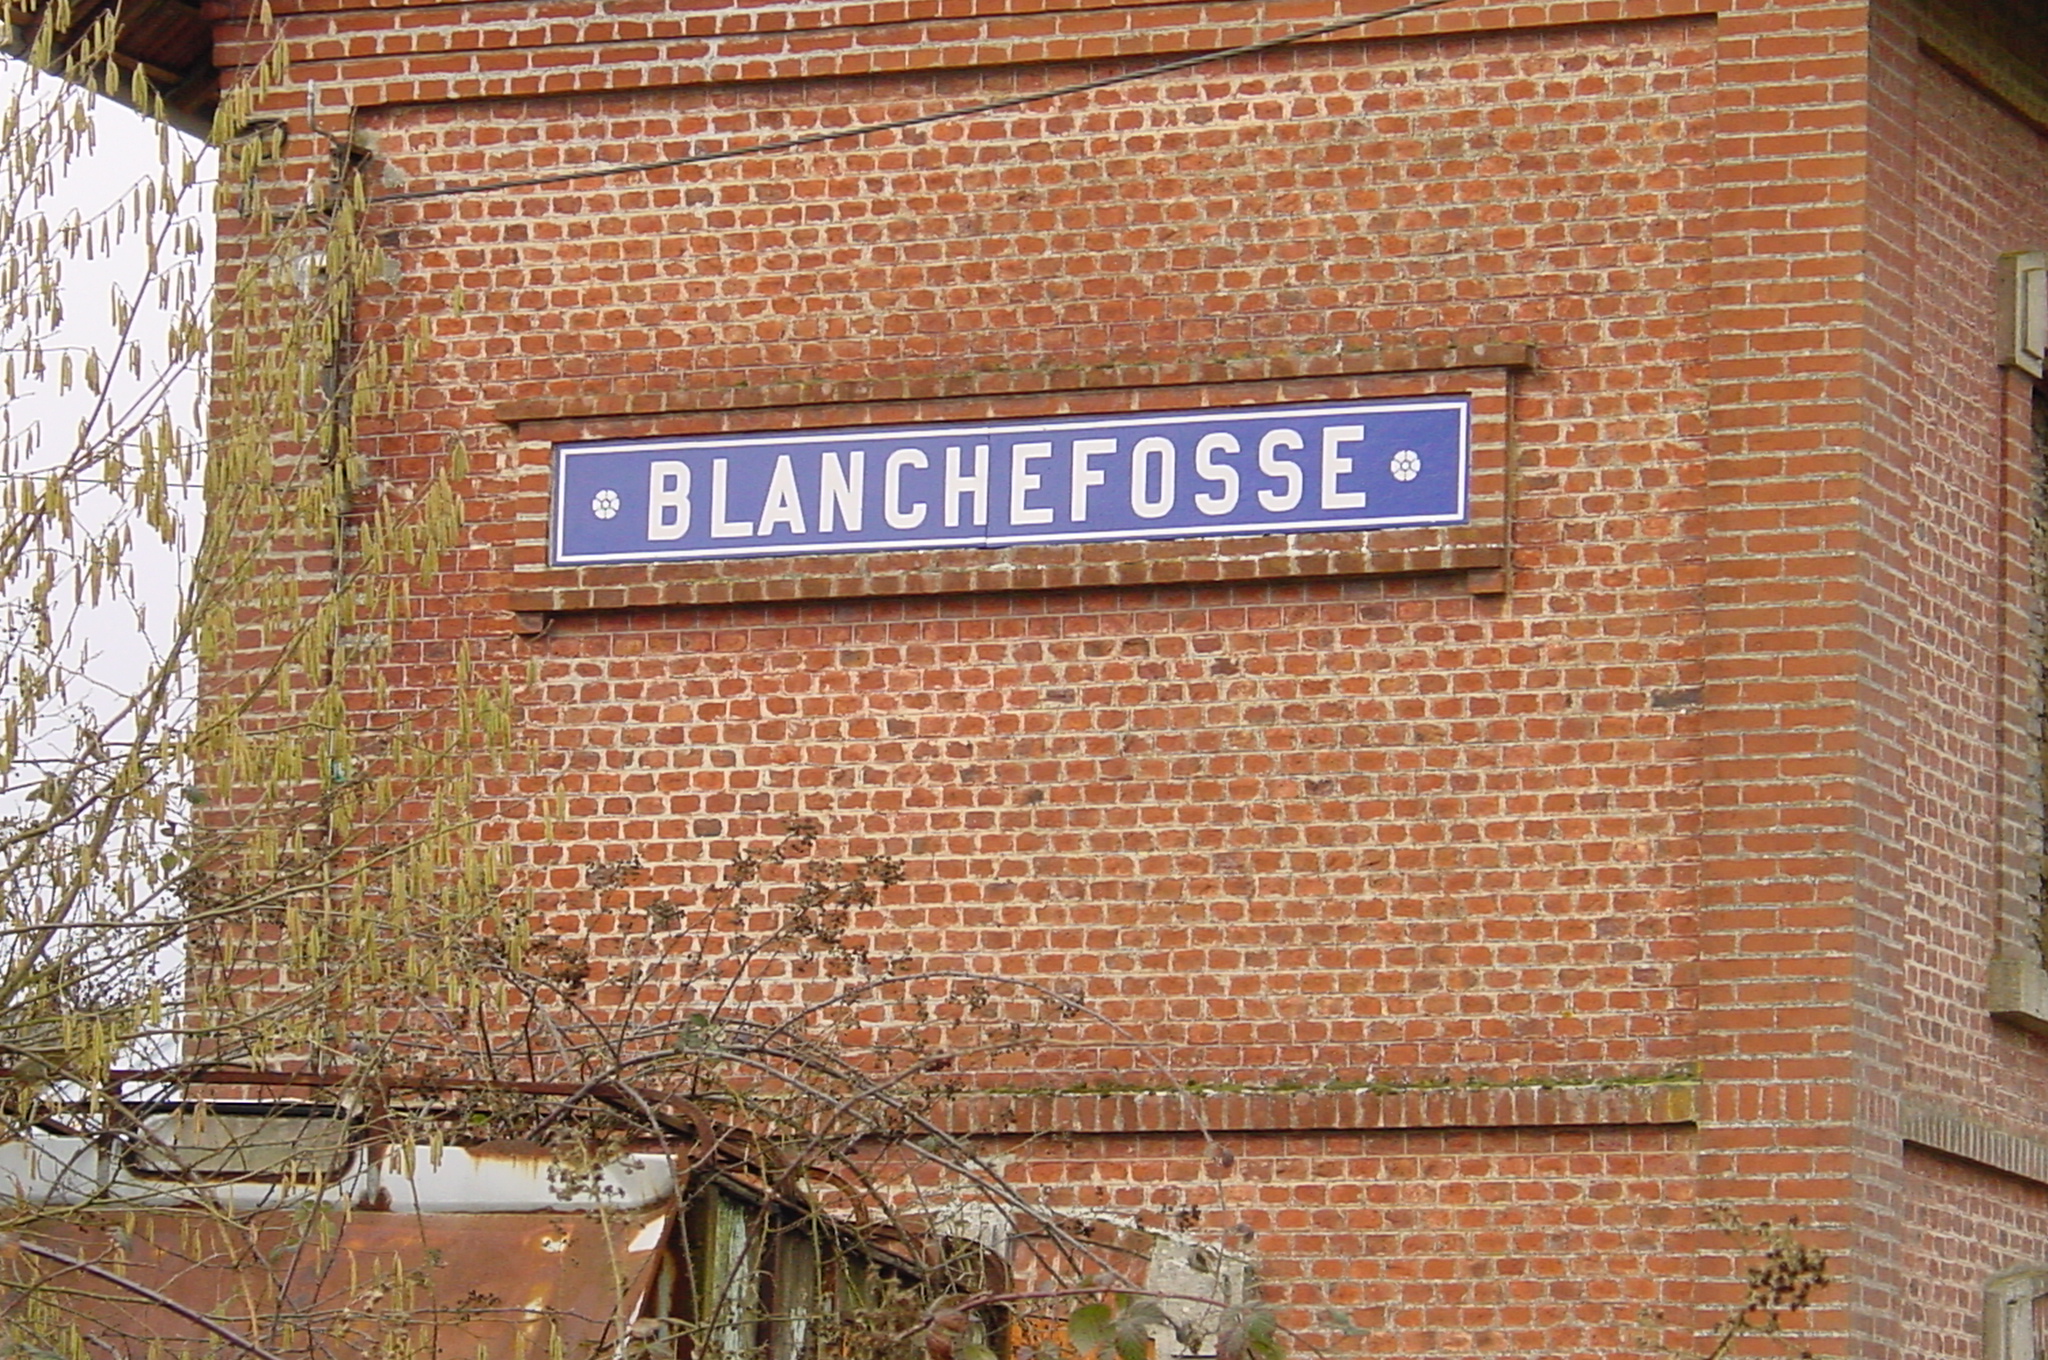 Blanchefosse naambord.jpg